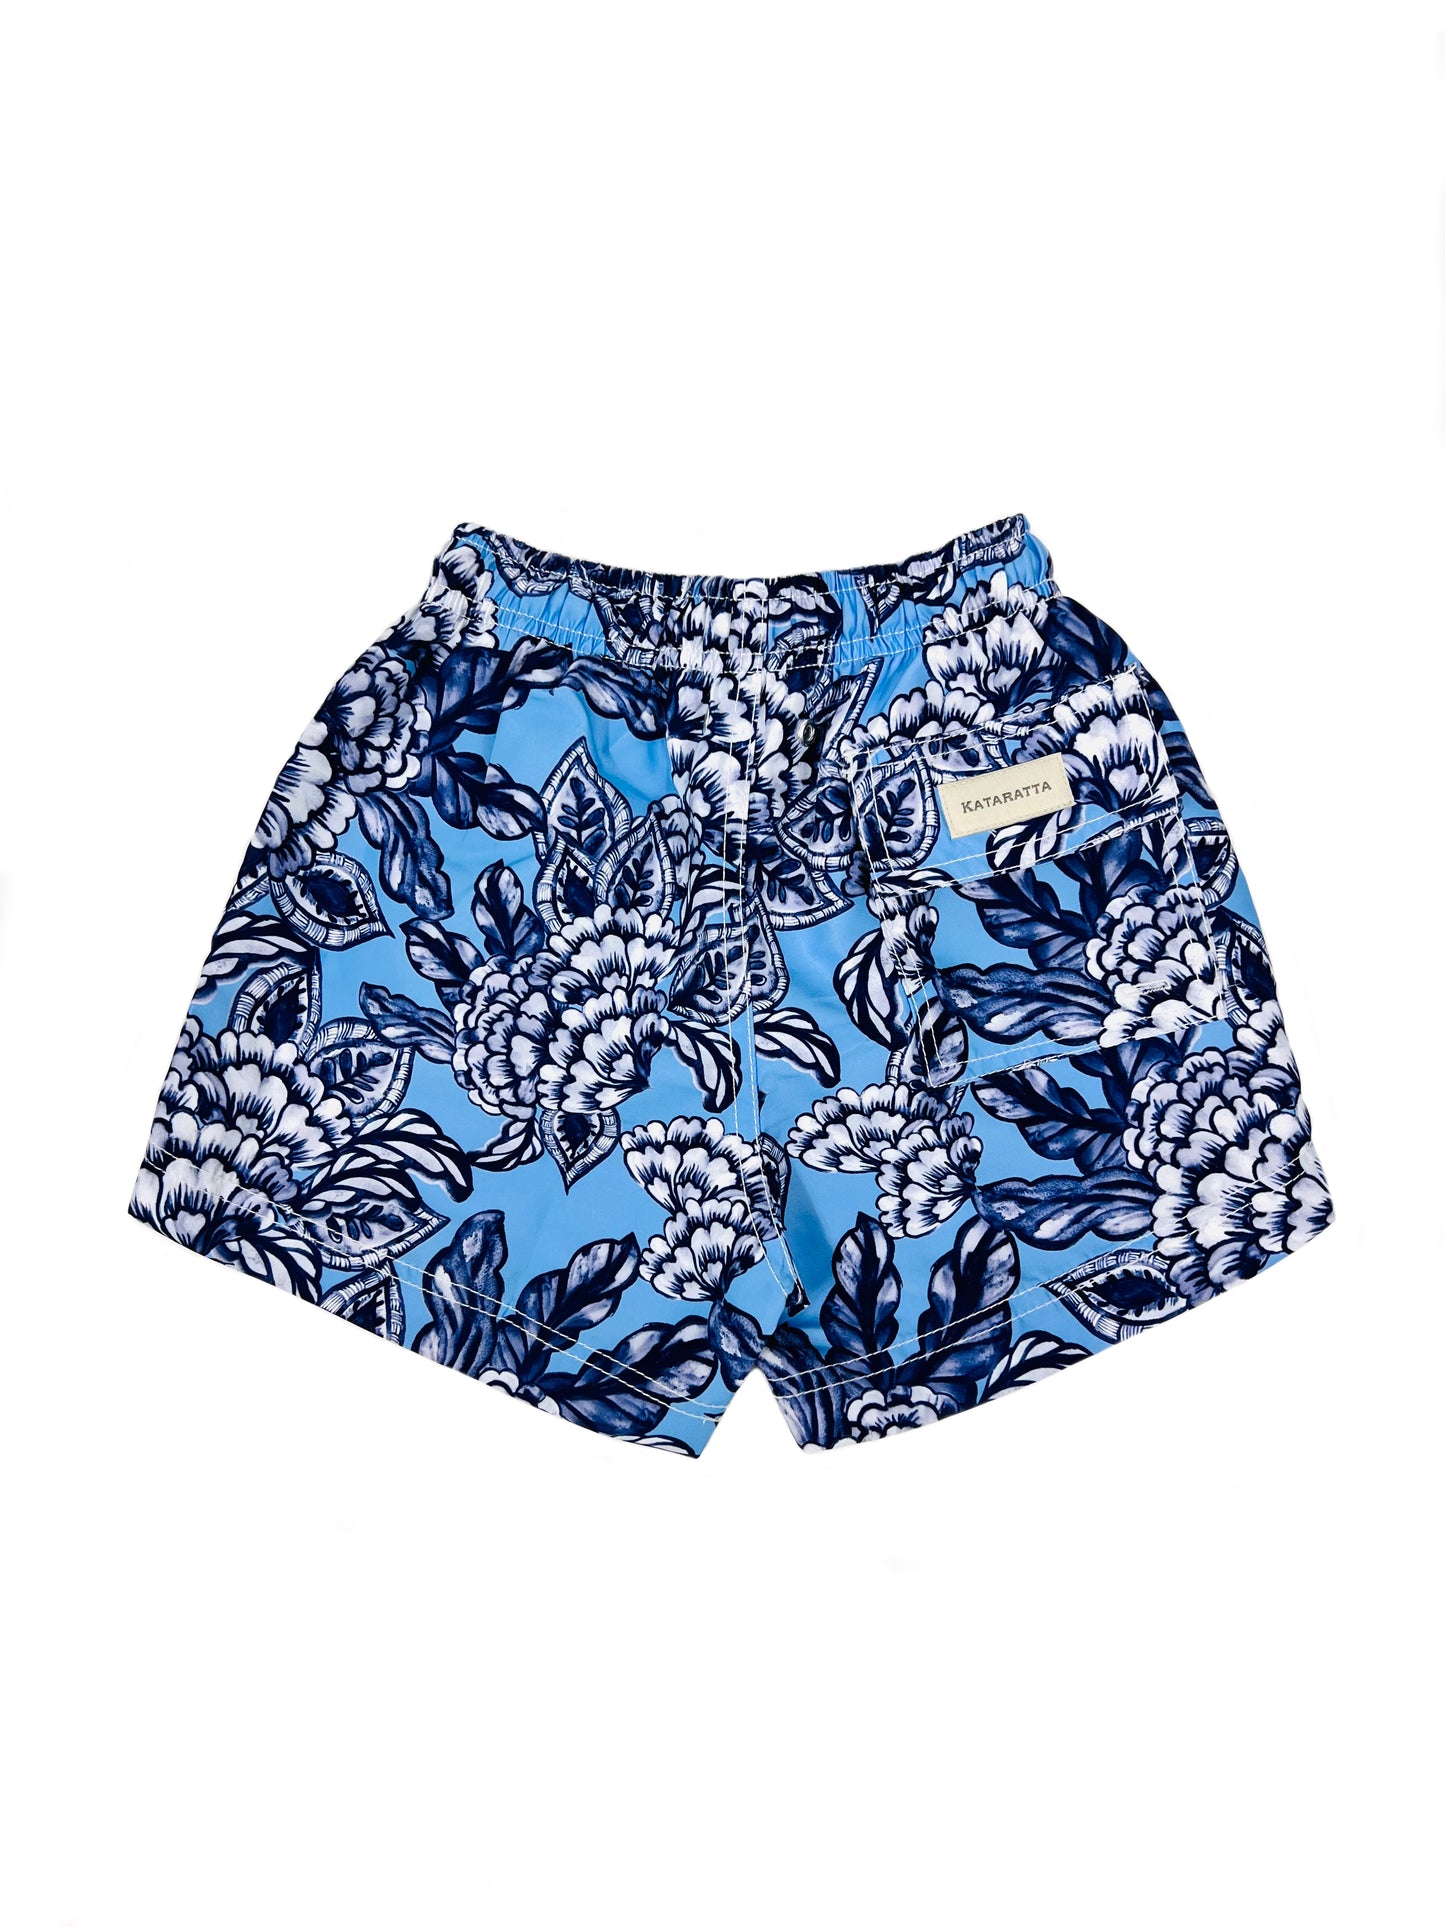 Blue floral print swim trunks